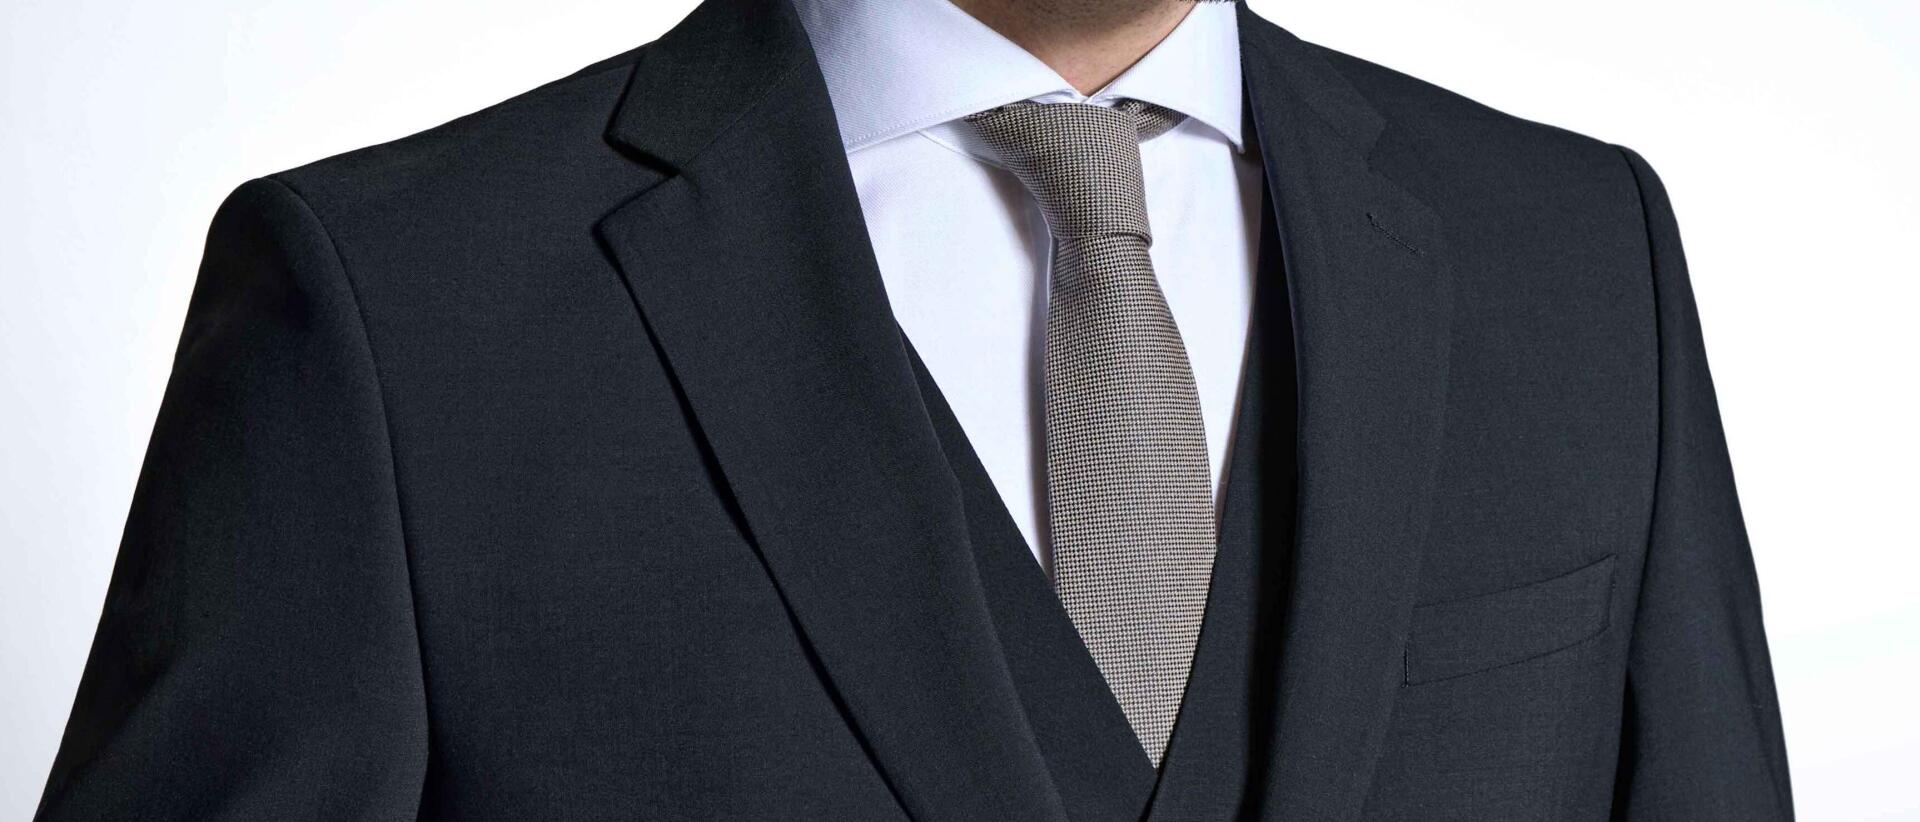 Model i Lindbergh jakkesæt og slips